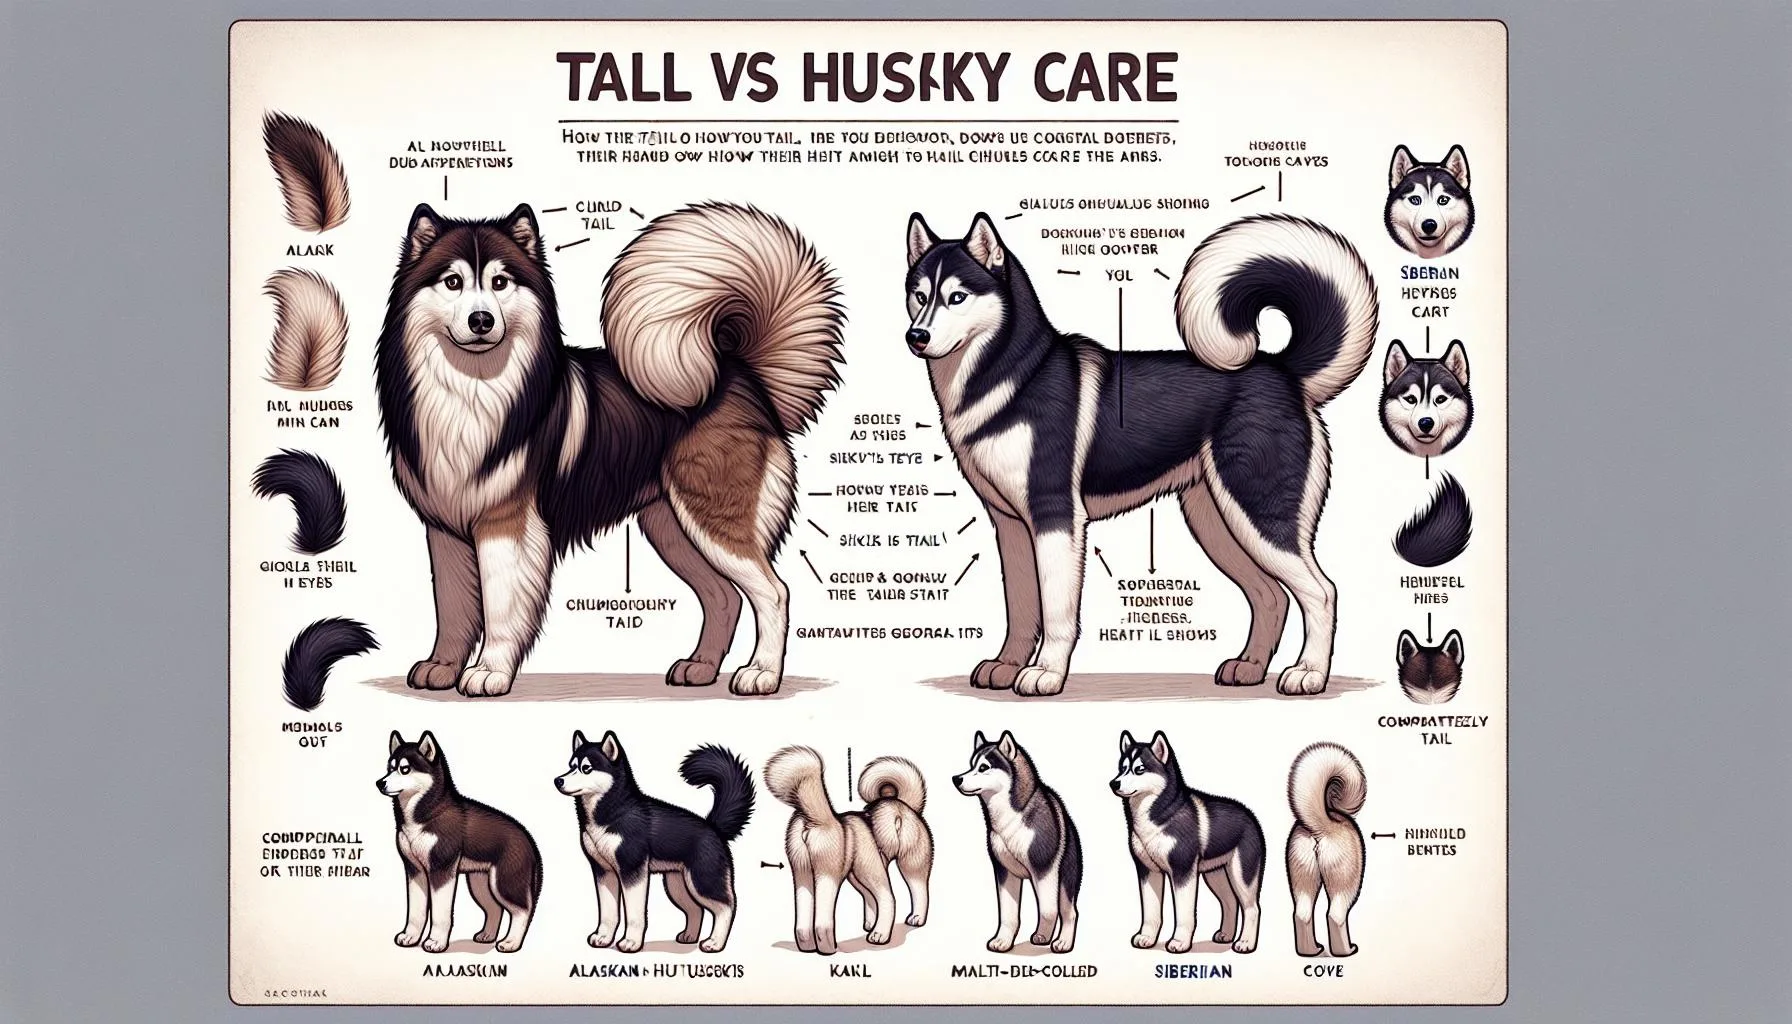 Alaskan husky vs siberian husky tail The Alaskan Husky Tail